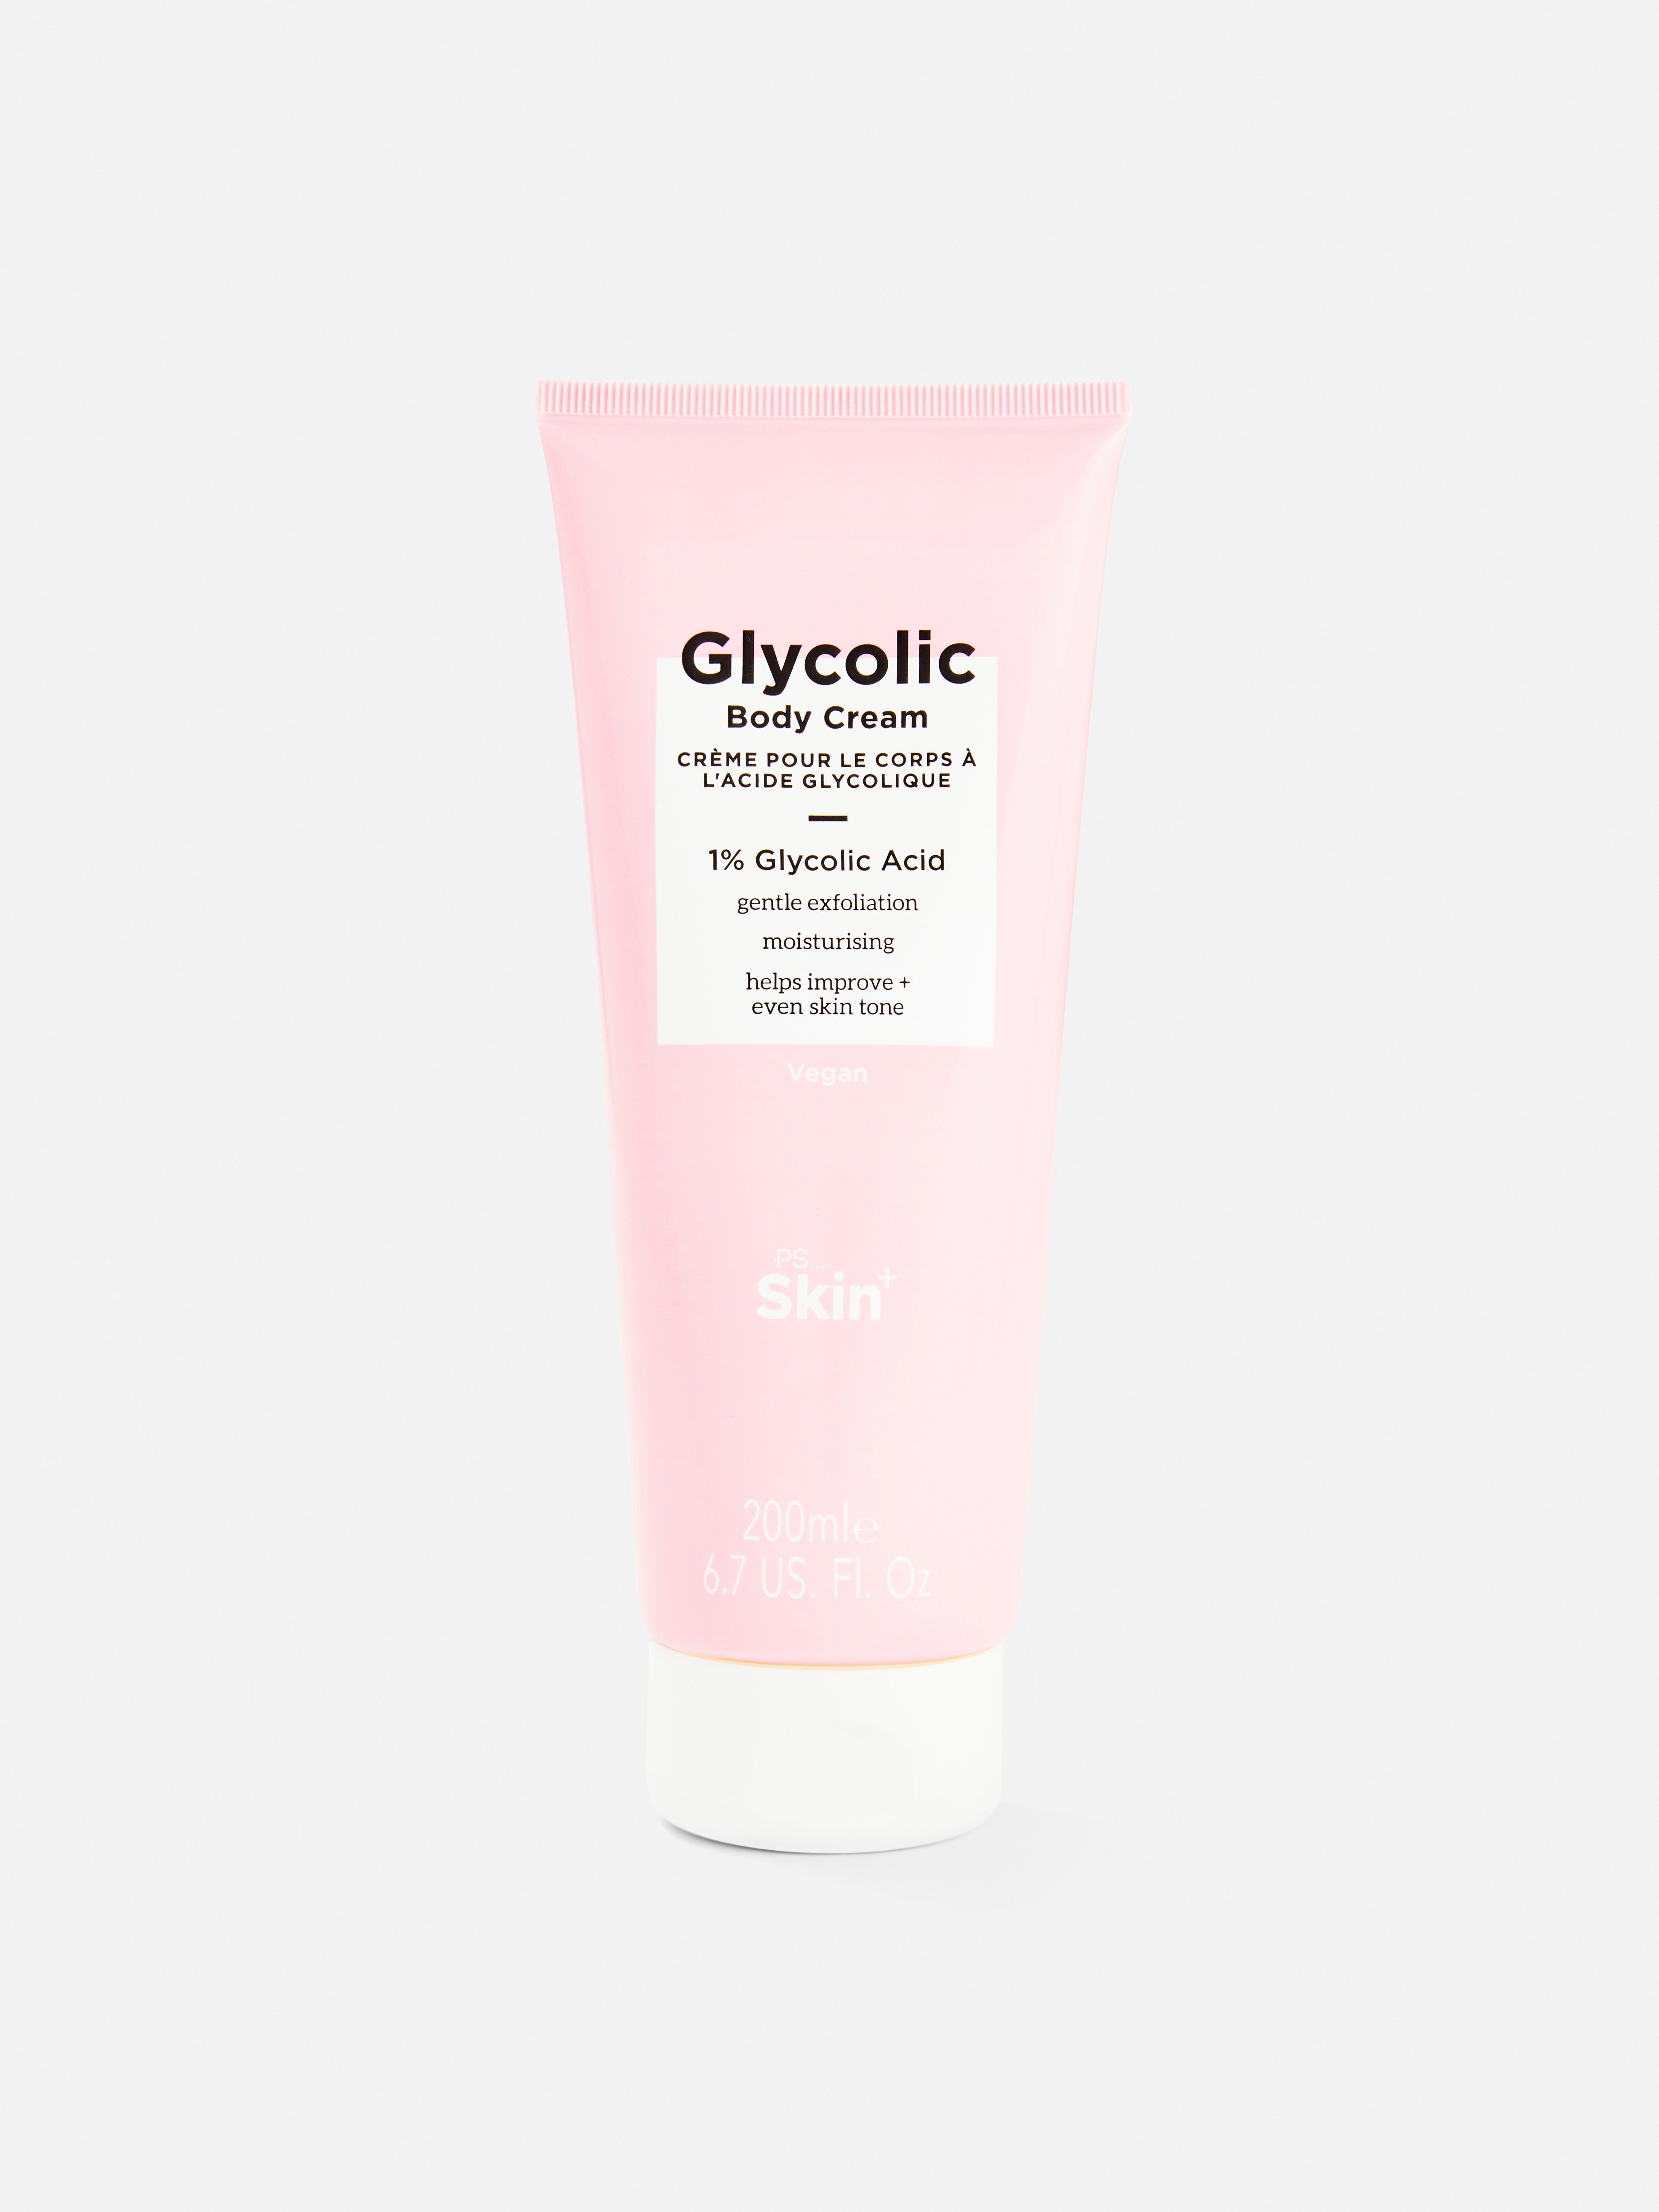 PS… Skin + Glycolic Body Cream